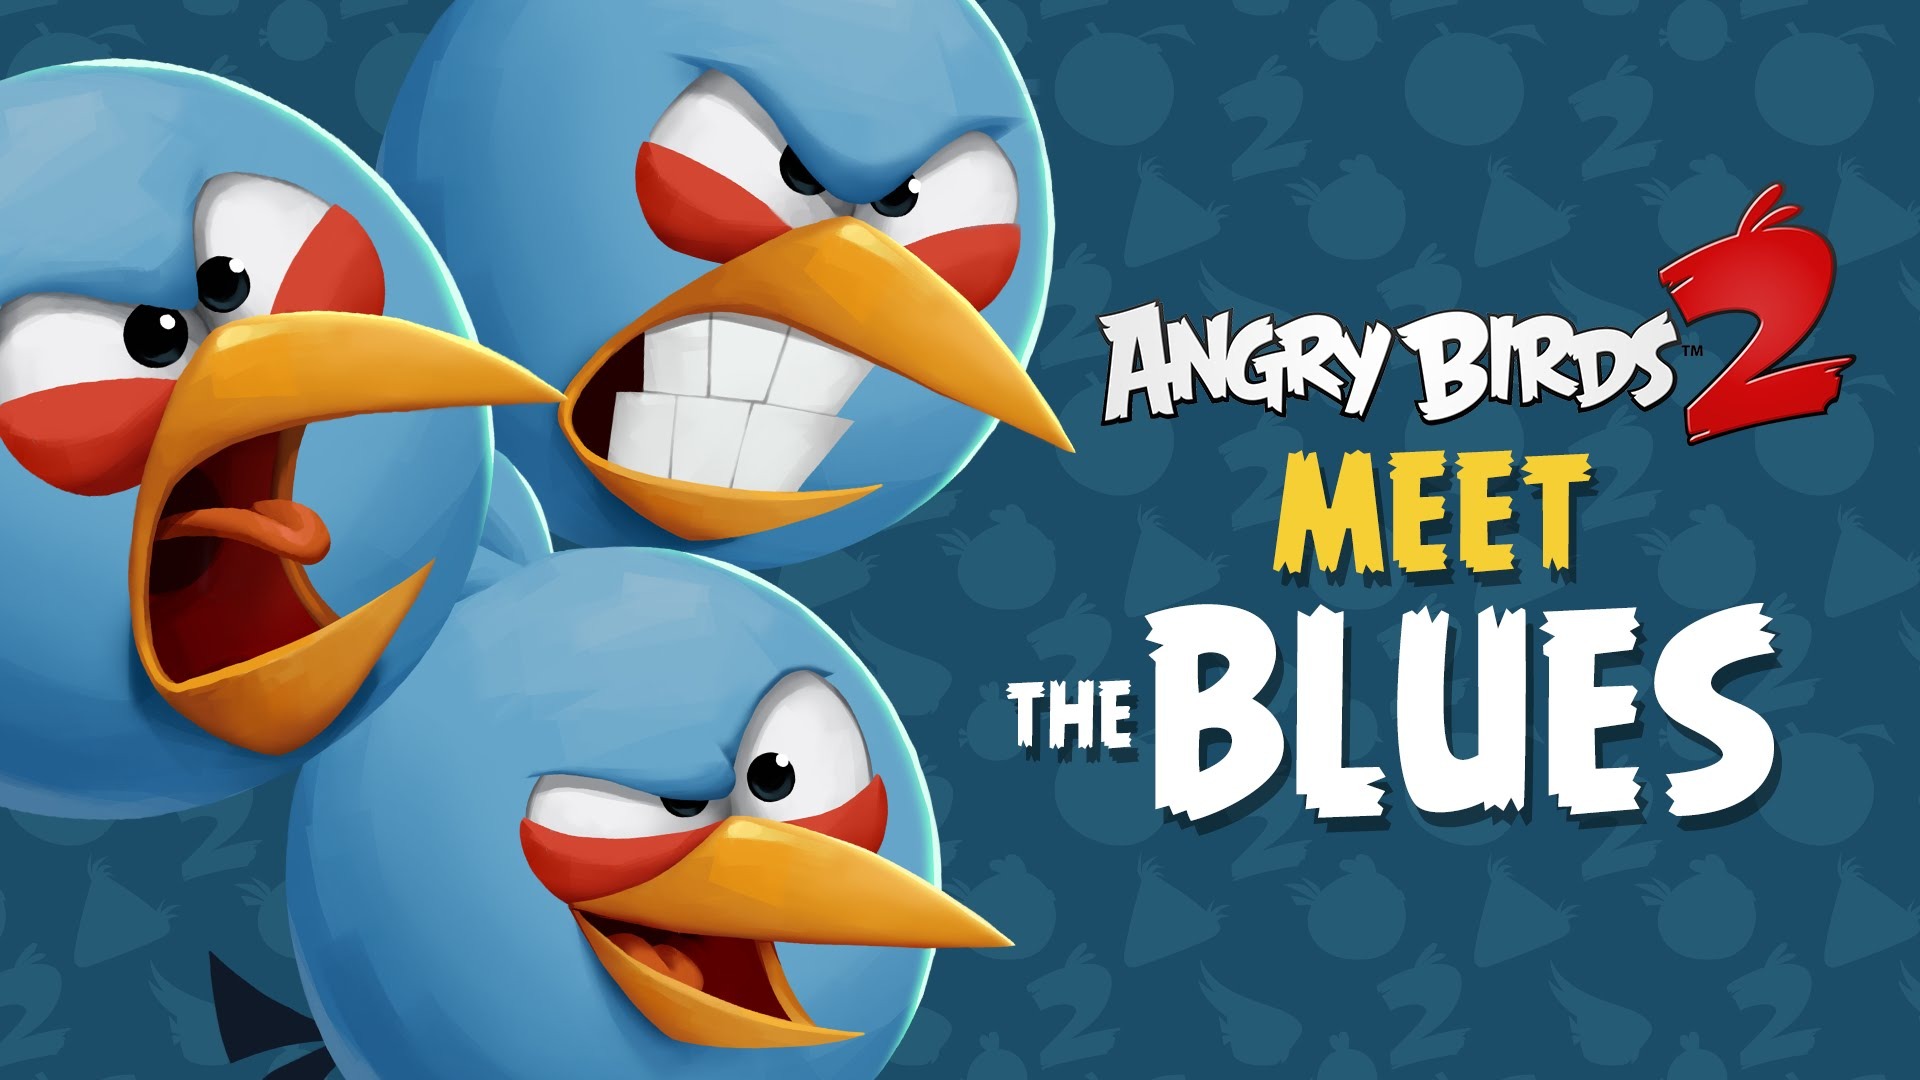 Birds 2d. Синяя Троица Angry Birds. Синяя птица Энгри бердз. Angry Birds птицы. Энгри бердз синий.